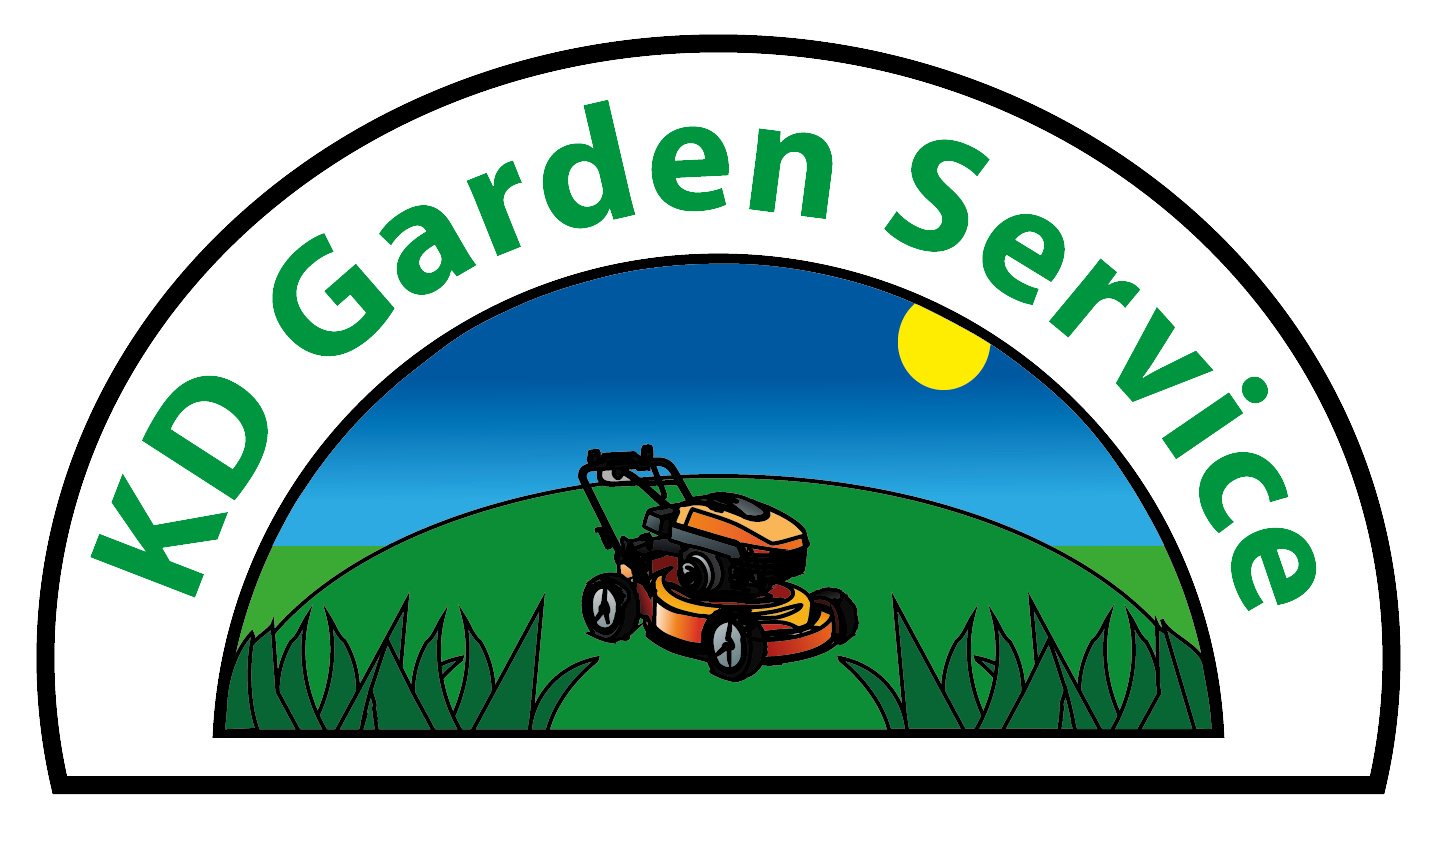 KD Garden Service